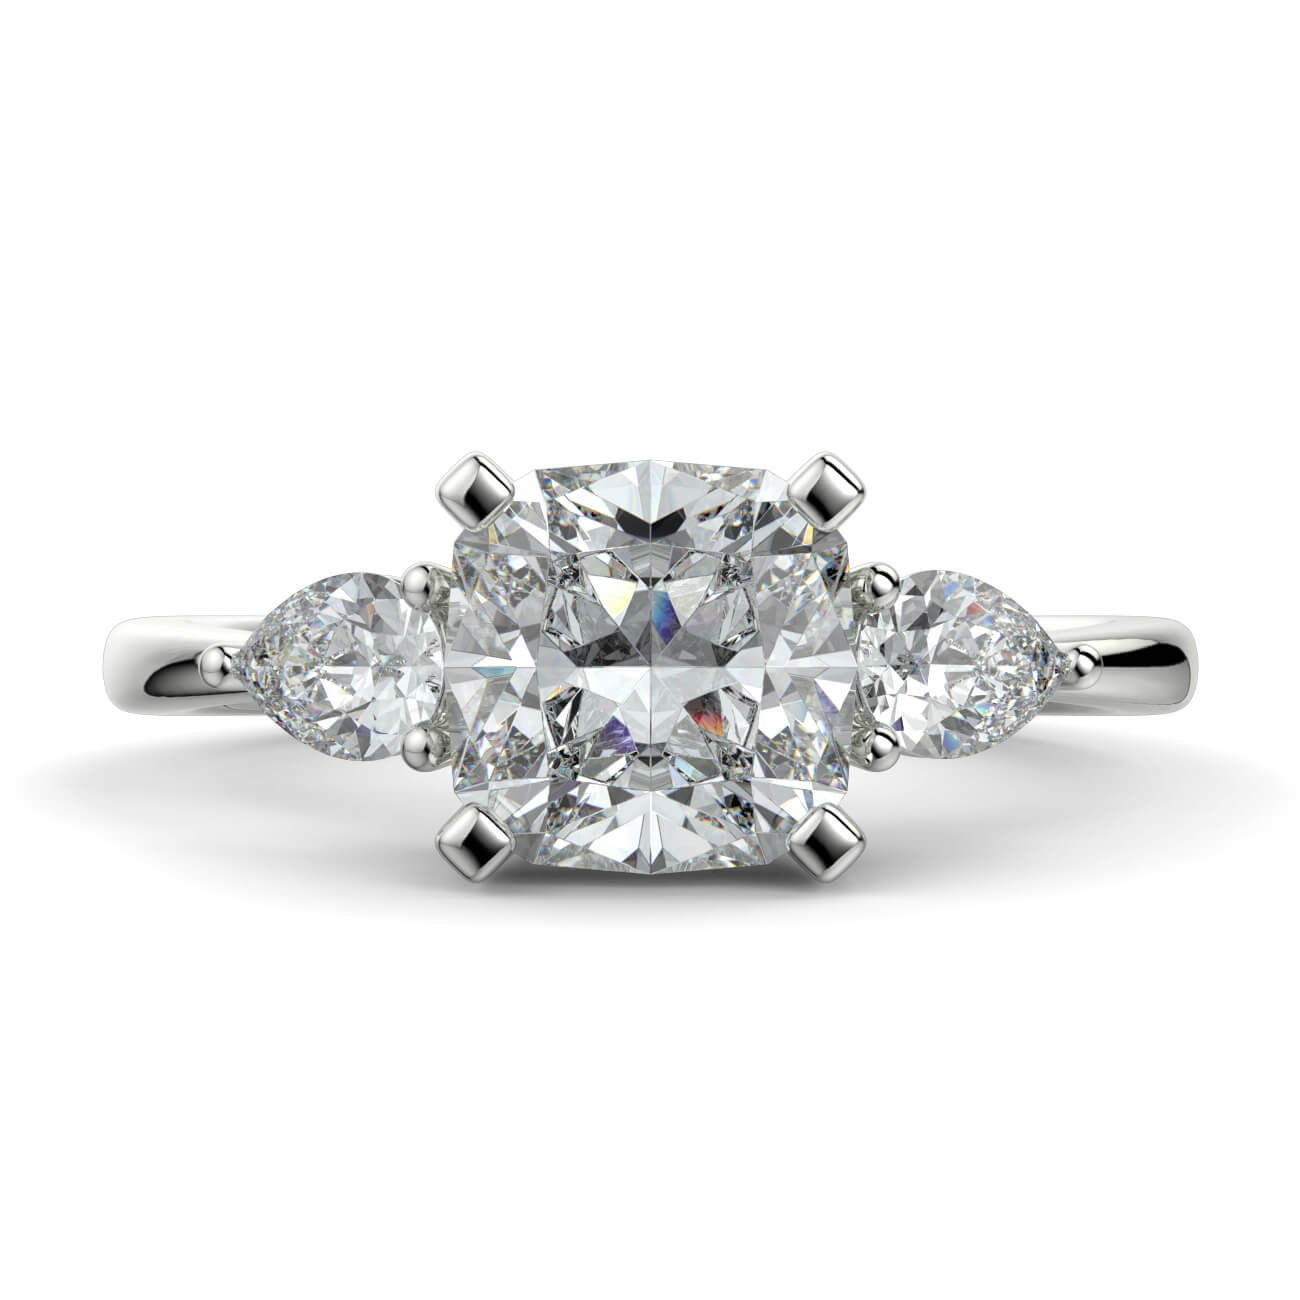 Cushion Cut Diamond Ring With Pear Shape Side Diamonds In White Gold – Australian Diamond Network